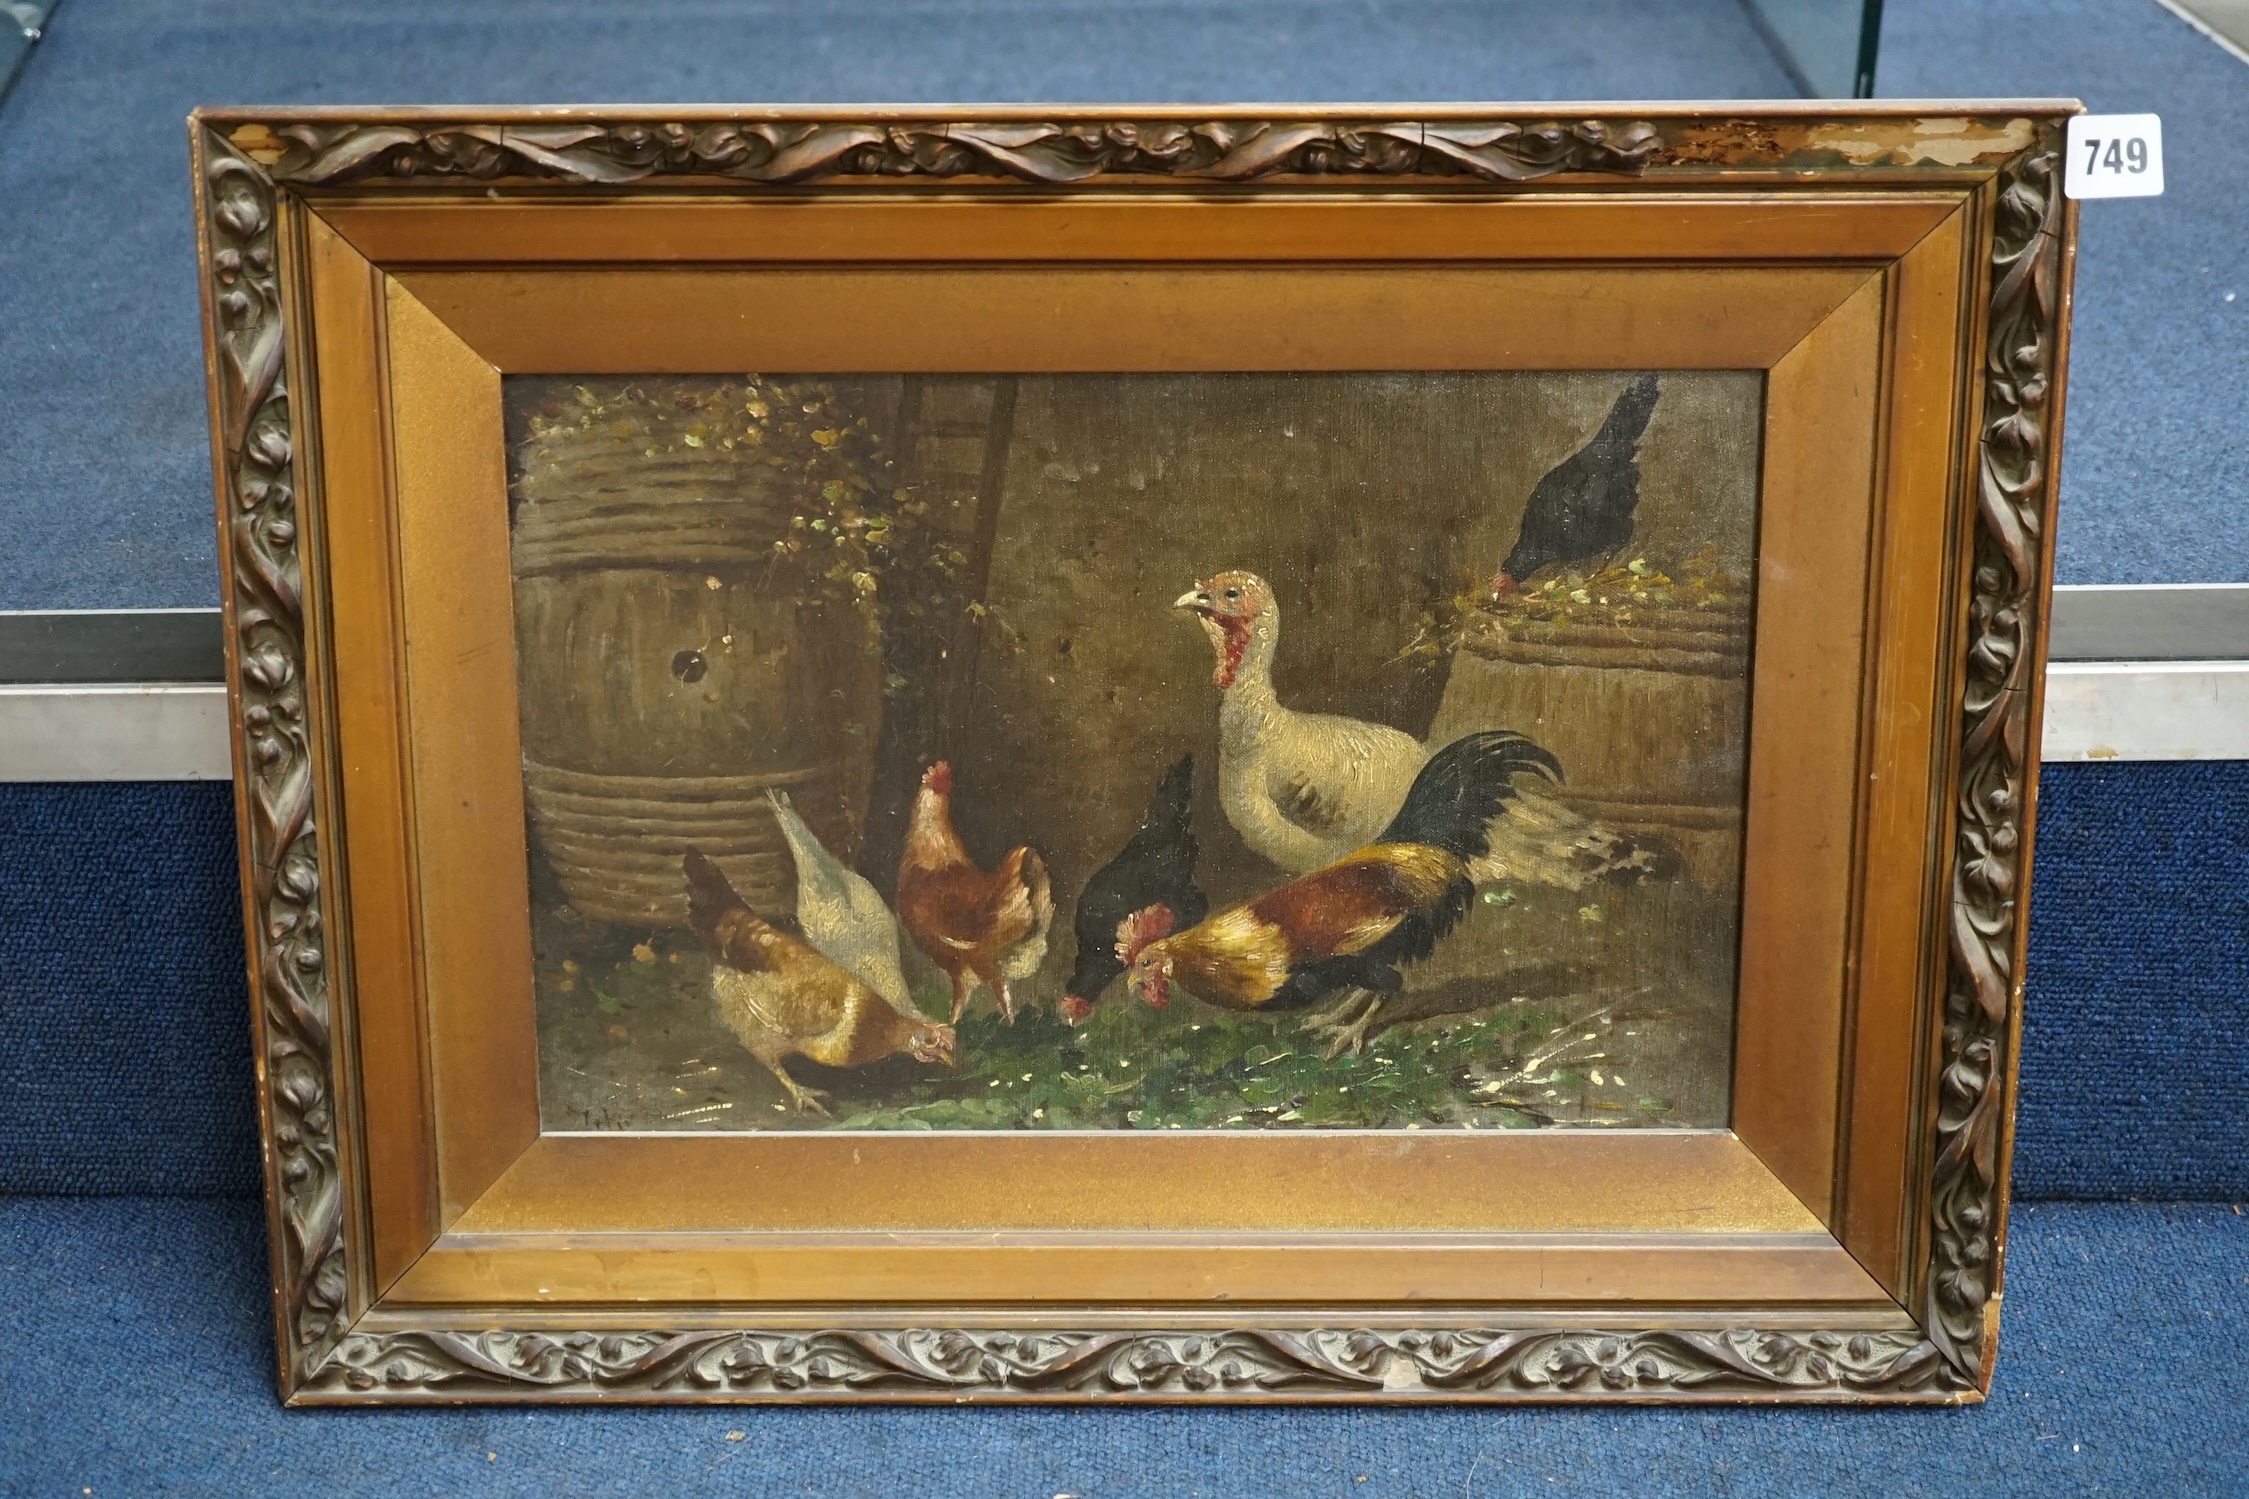 19th century, oil on canvas board, Study of chickens and turkeys feeding, 24 x 37cm. Condition - fair